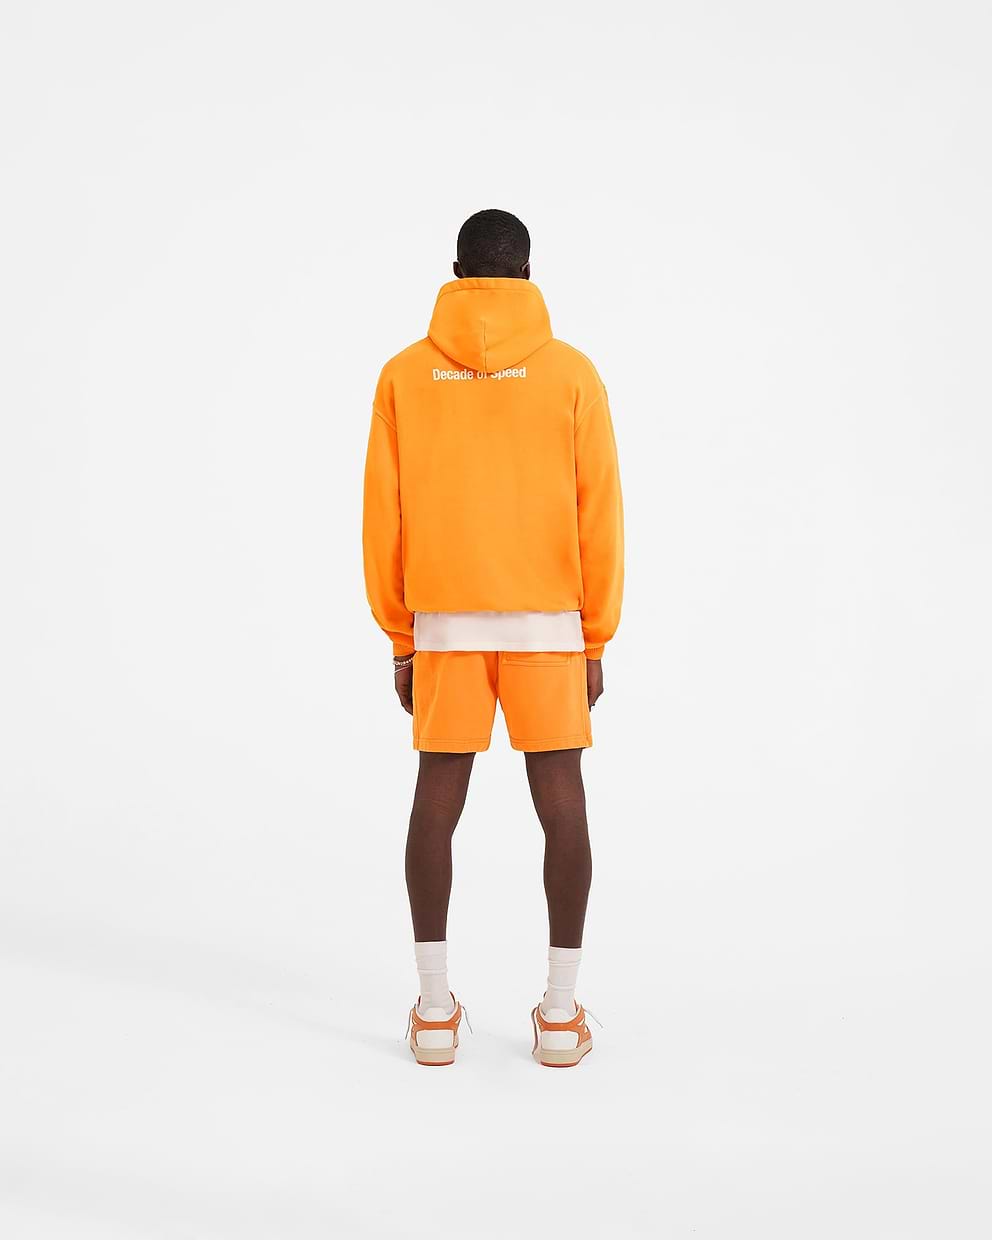 Decade of Speed Shorts - Neon Orange